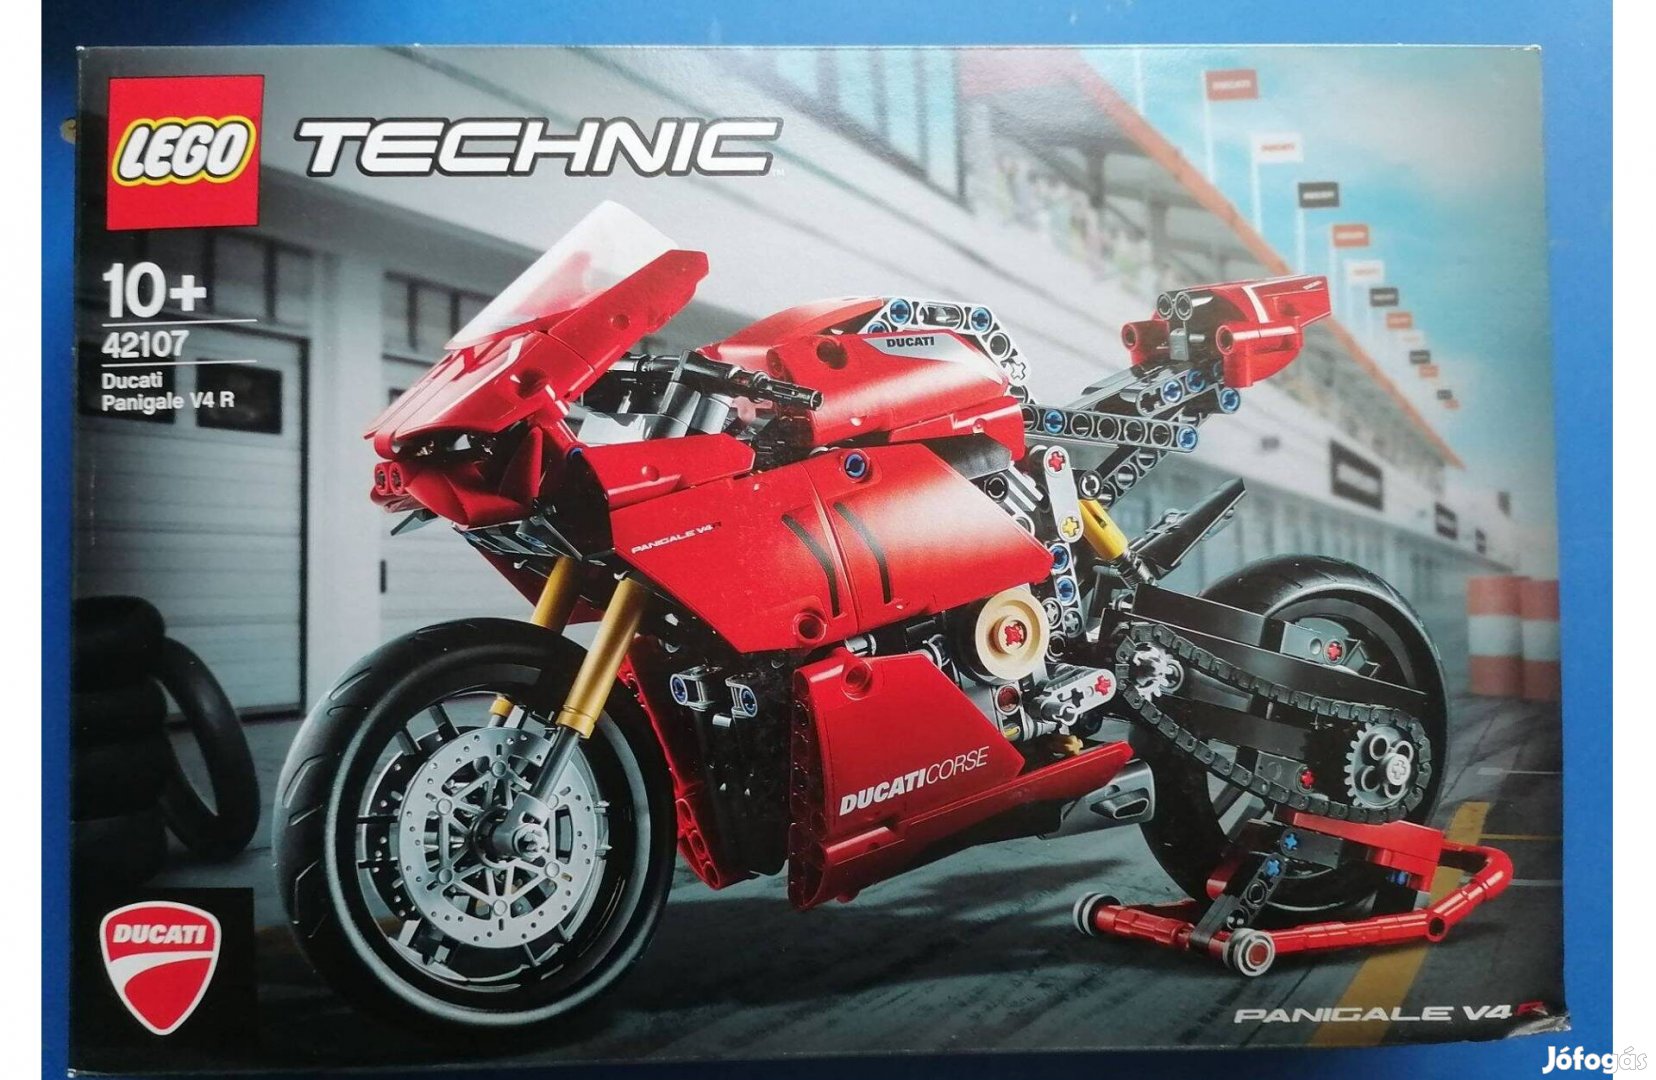 Lego Technic - Ducati Panigale V4 R 42107 Új, bontatlan